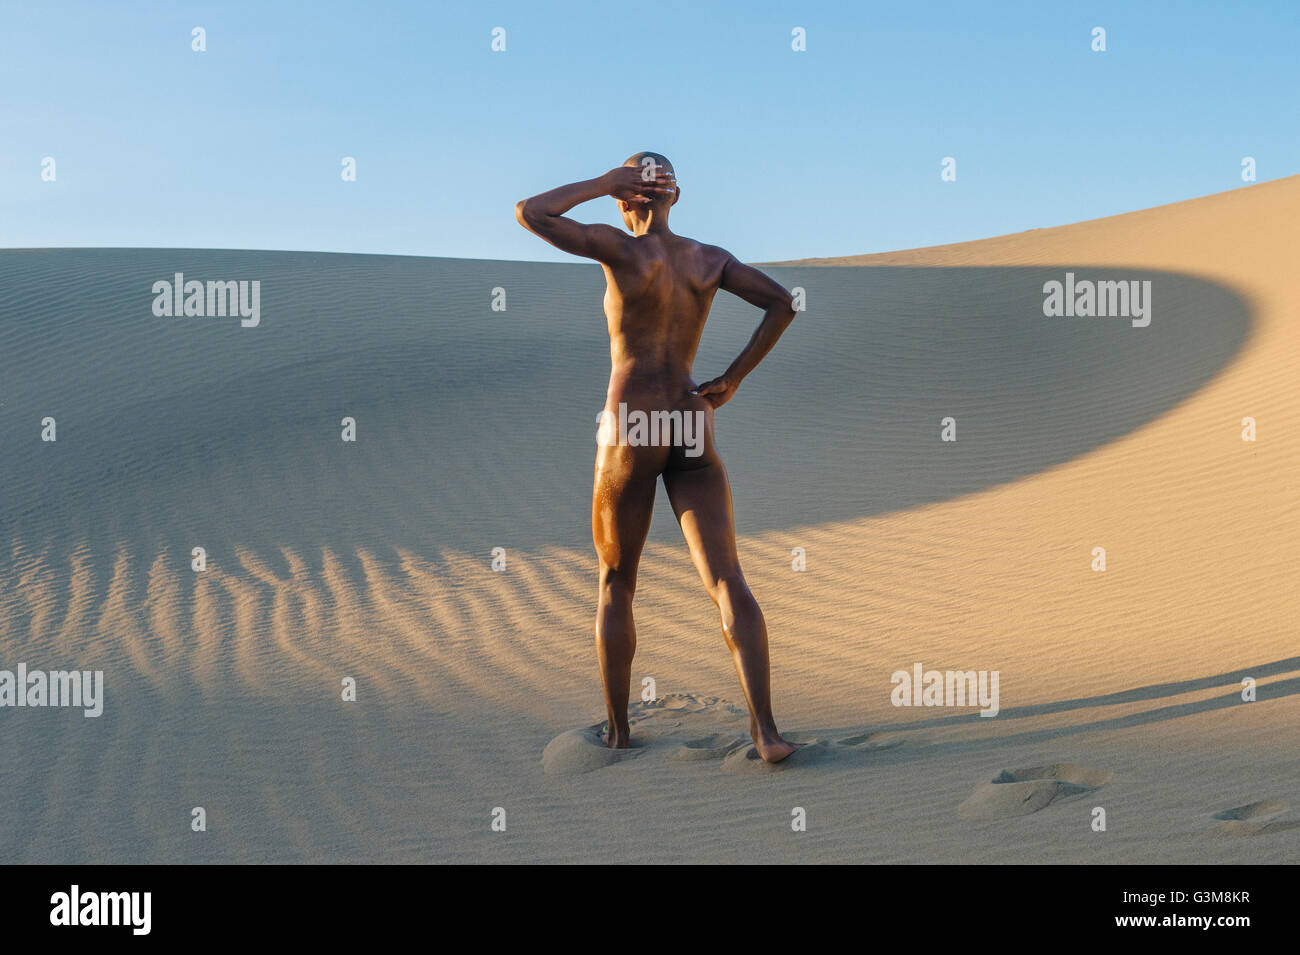 Nude woman standing in desert Stock Photo